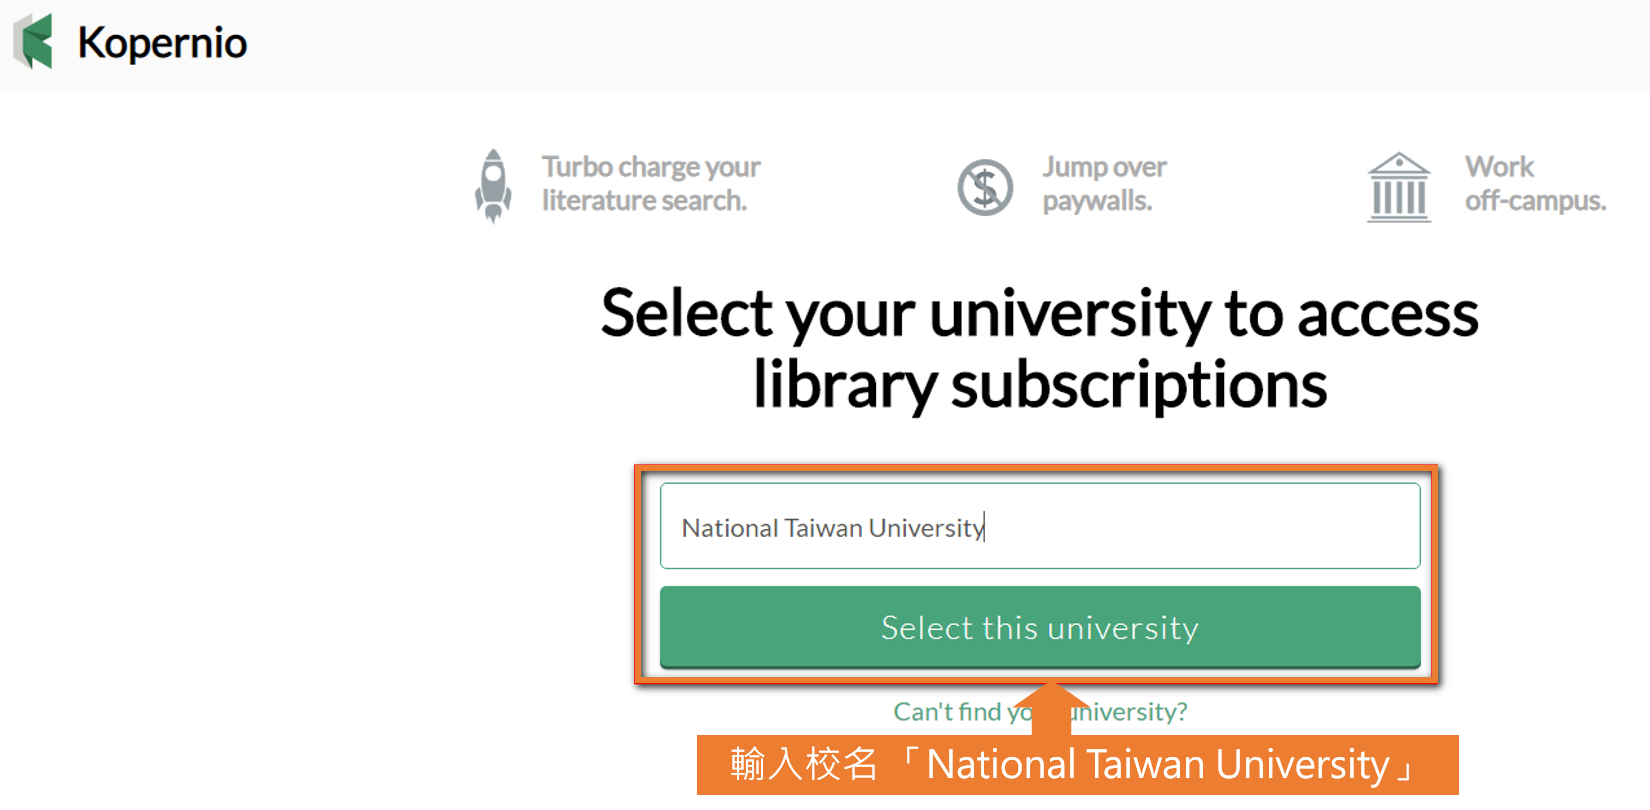 輸入校名 National Taiwan University點選綠框。